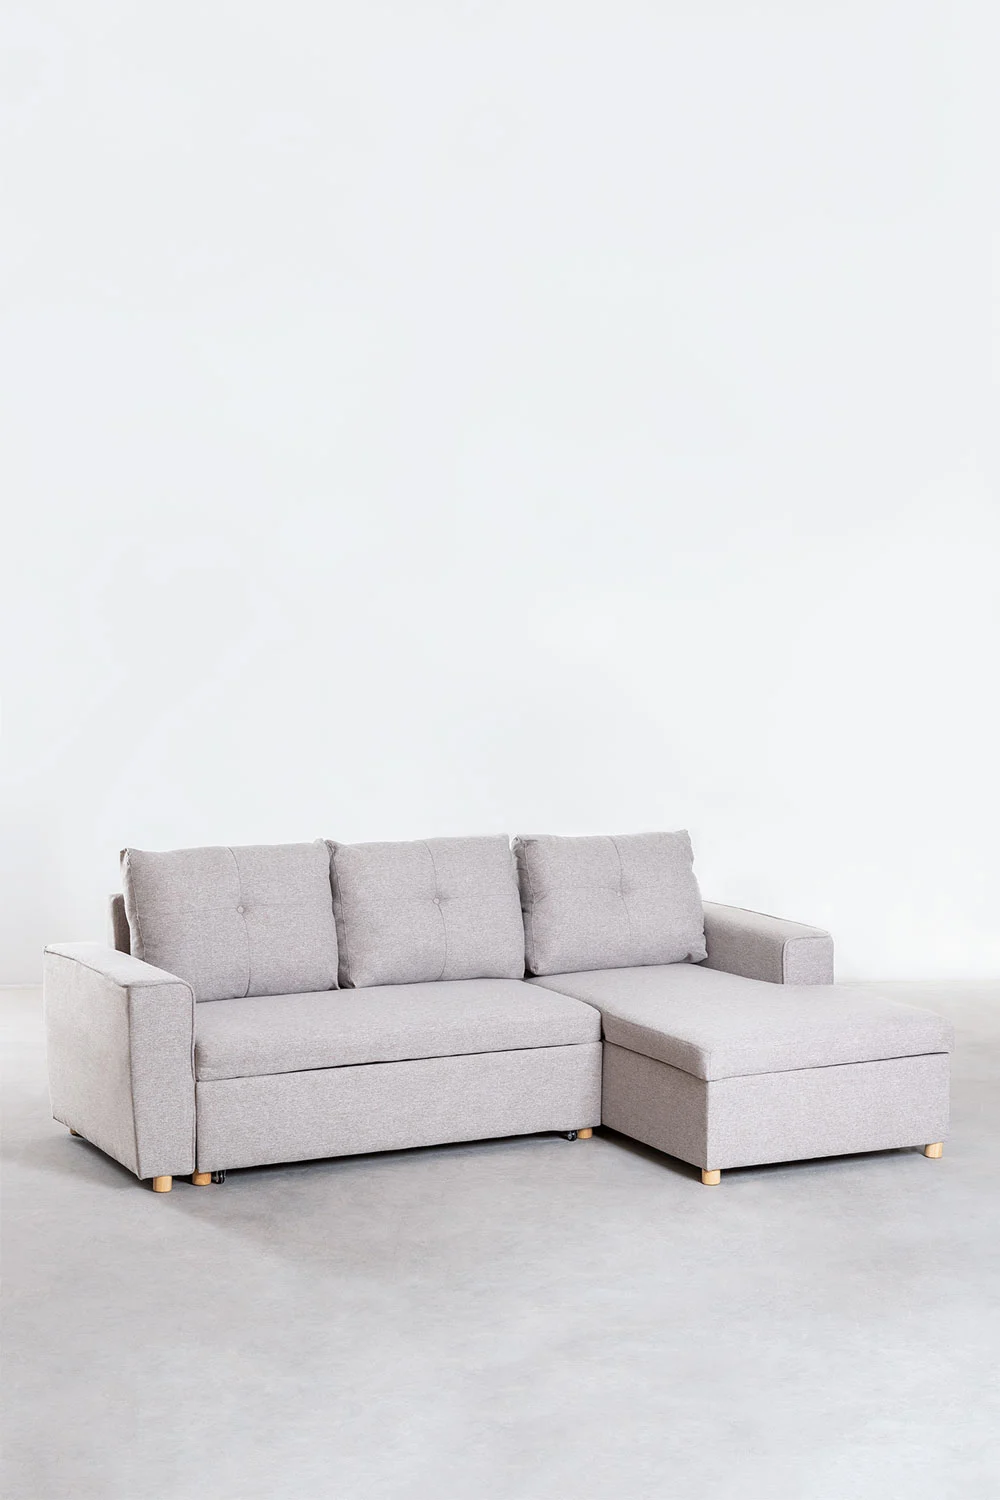 sofa cama chaise longue 3 plazas en tela calvin